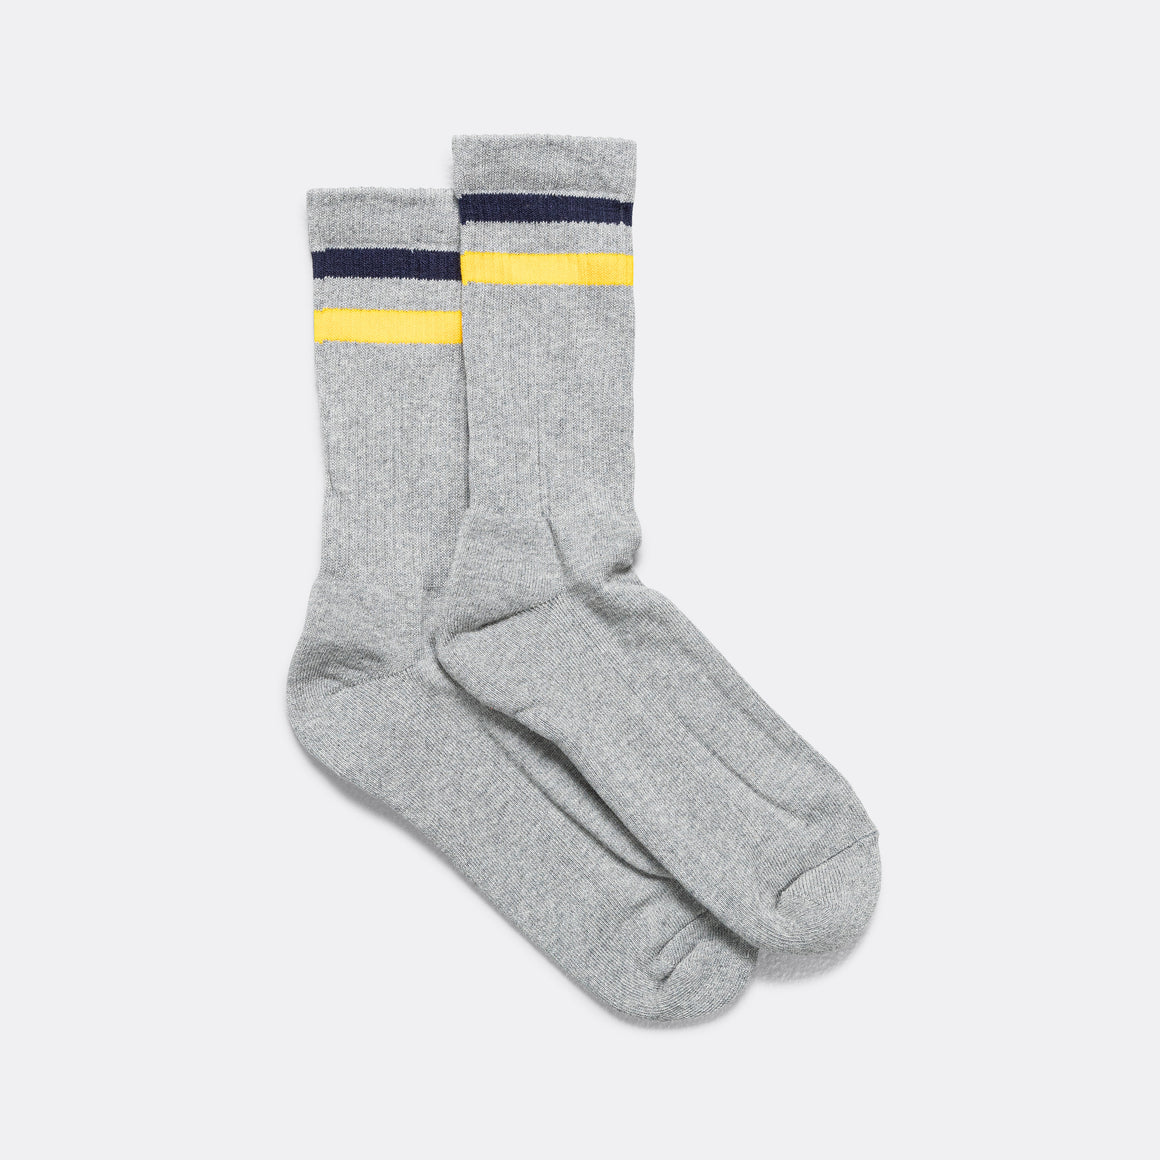 Cotton Cap Crew Socks - Charcoal/Heather Grey